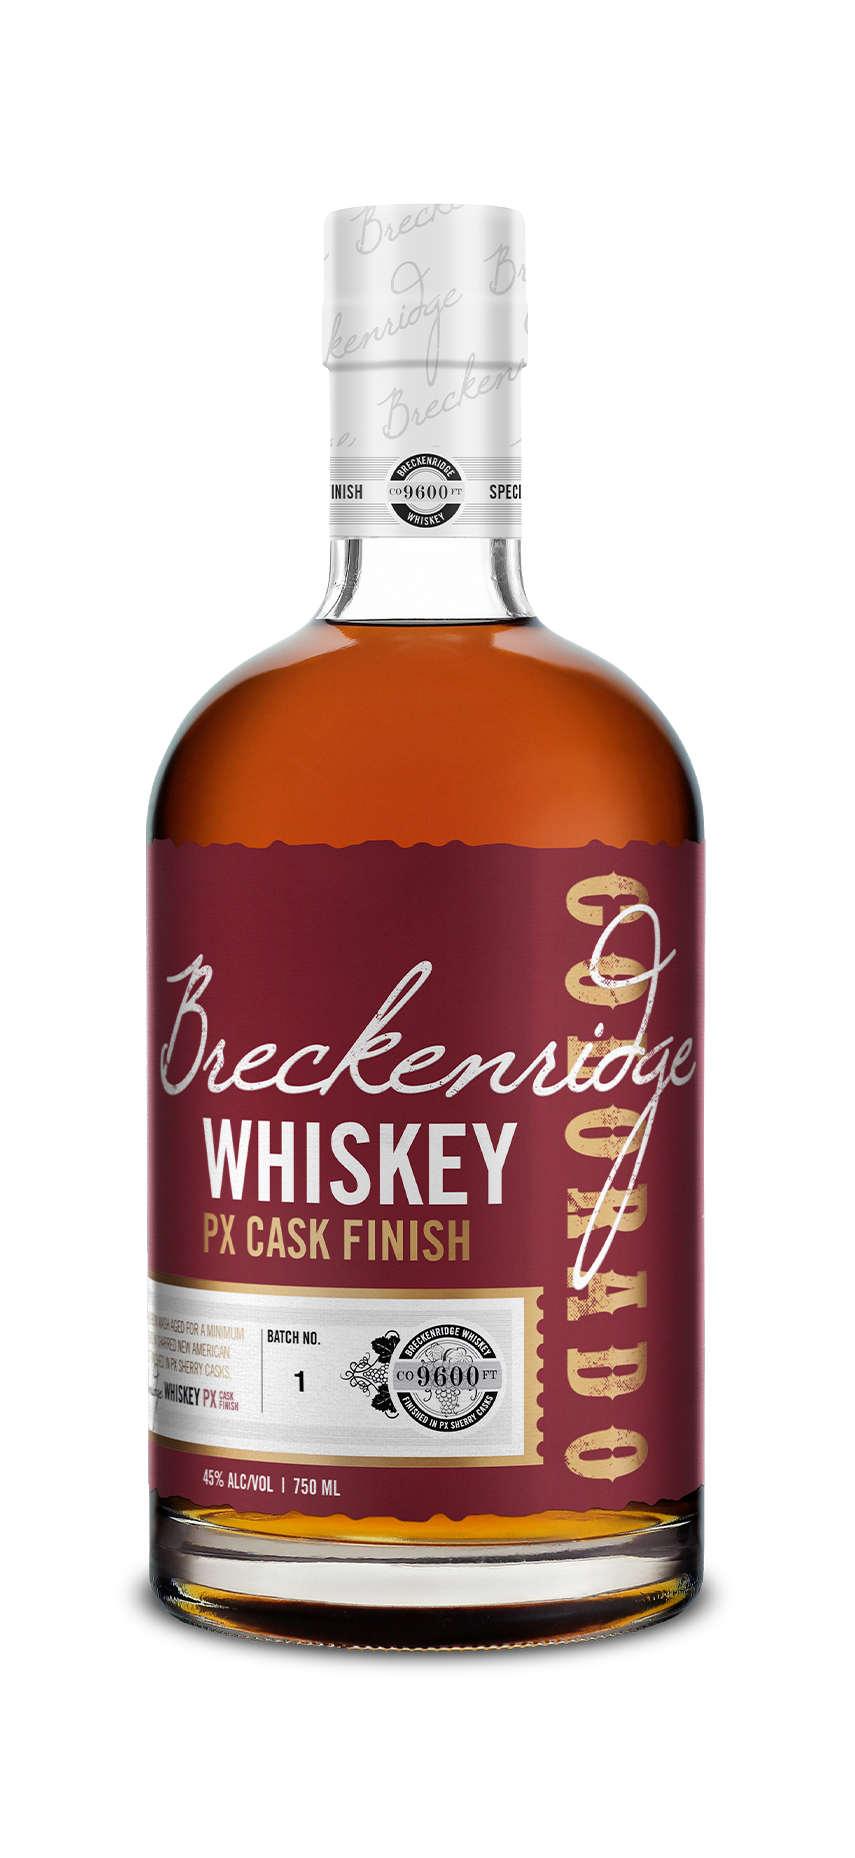 Breckenridge PX Cask Finish whiskey bottle 750 mL